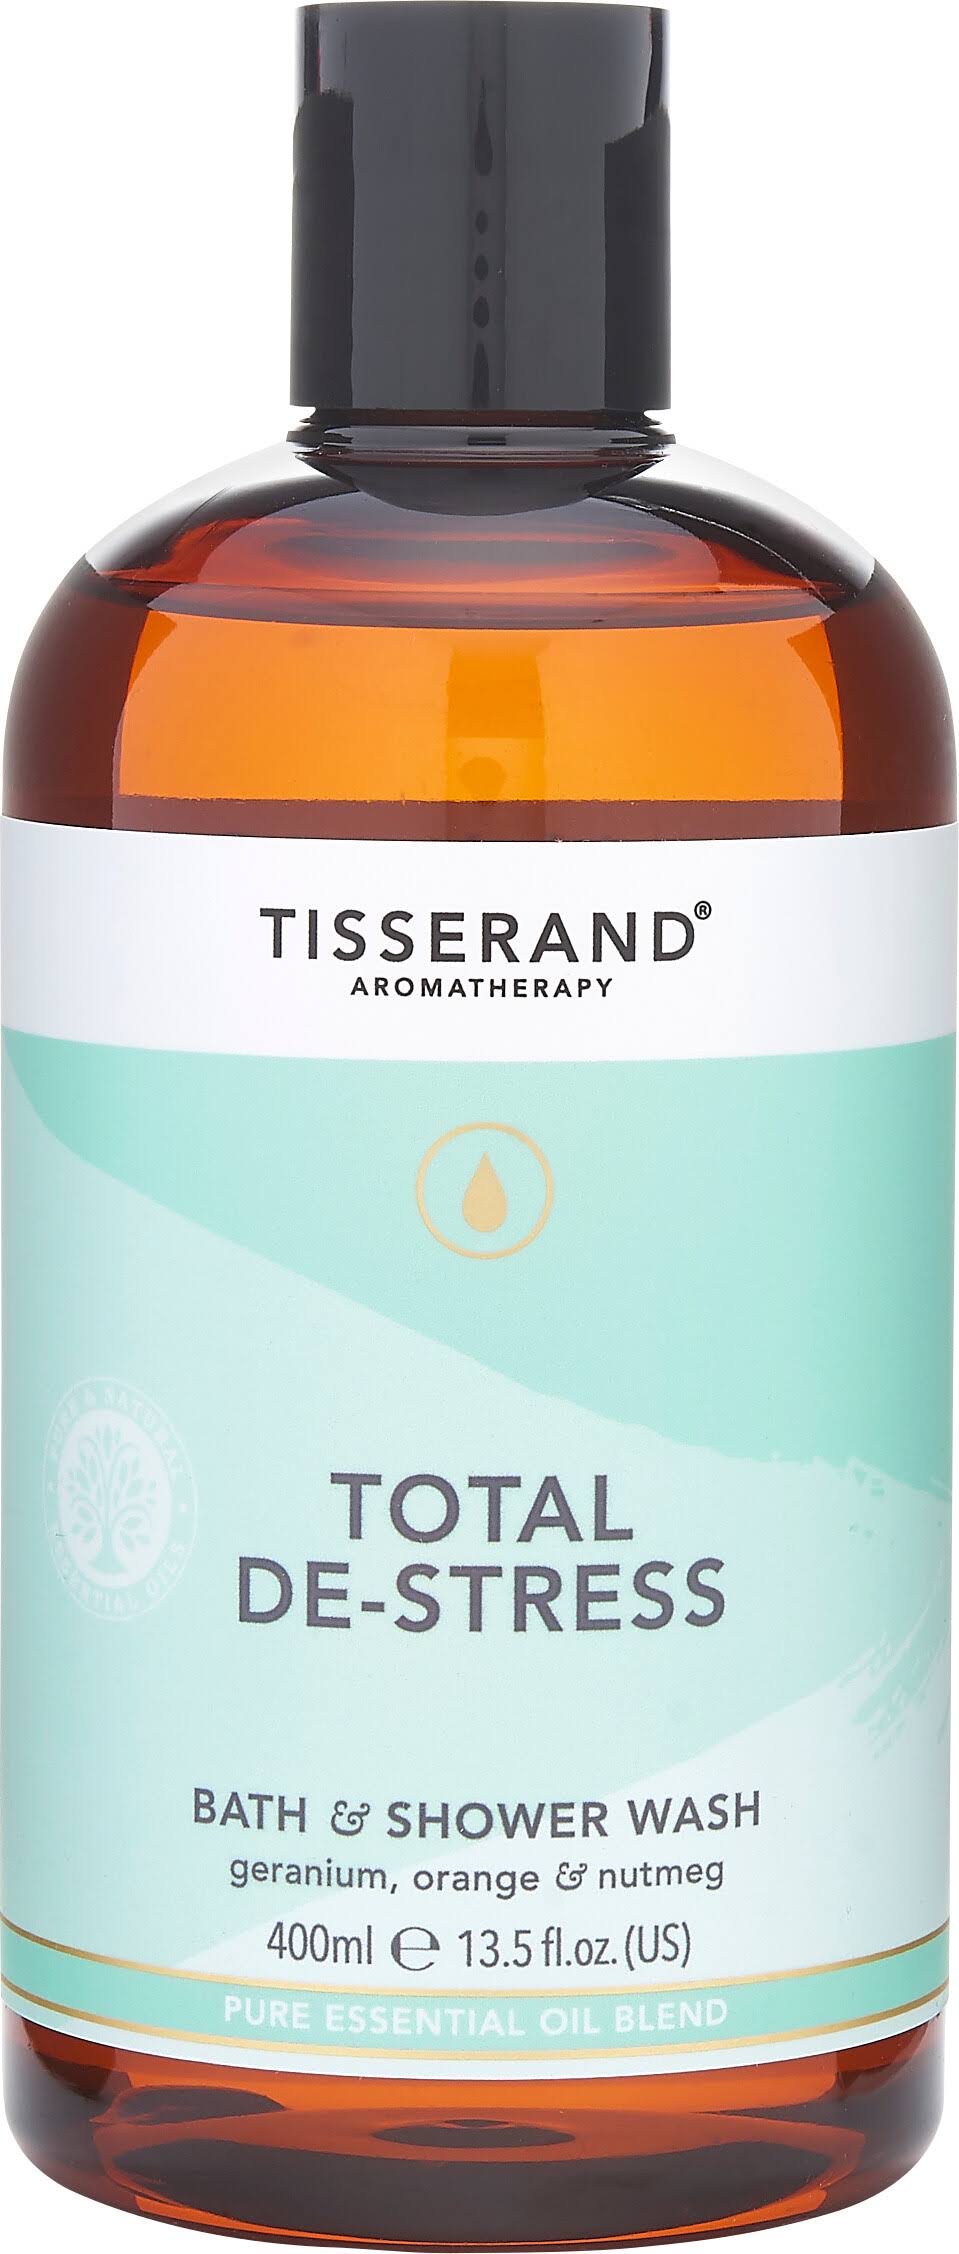 TISSERAND Total De-Stress Bath & Shower Wash 400ml